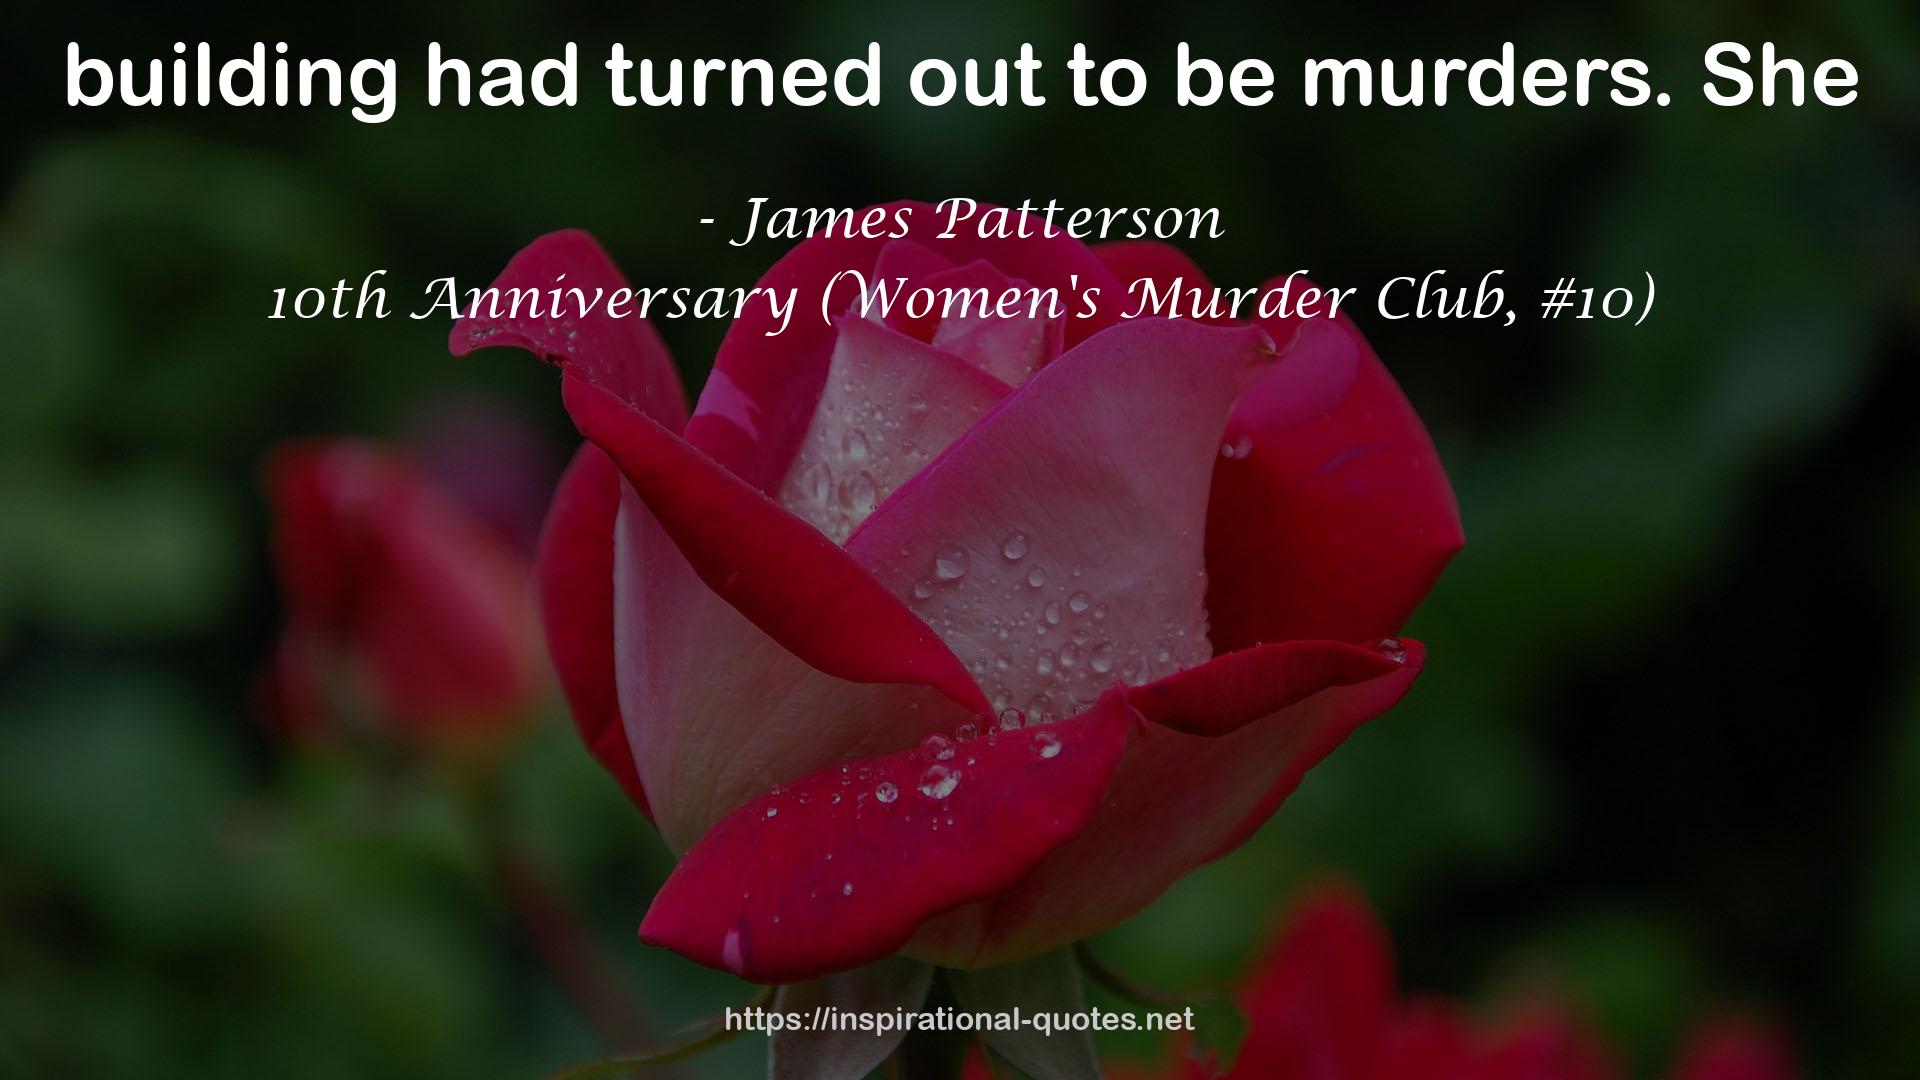 10th Anniversary (Women's Murder Club, #10) QUOTES